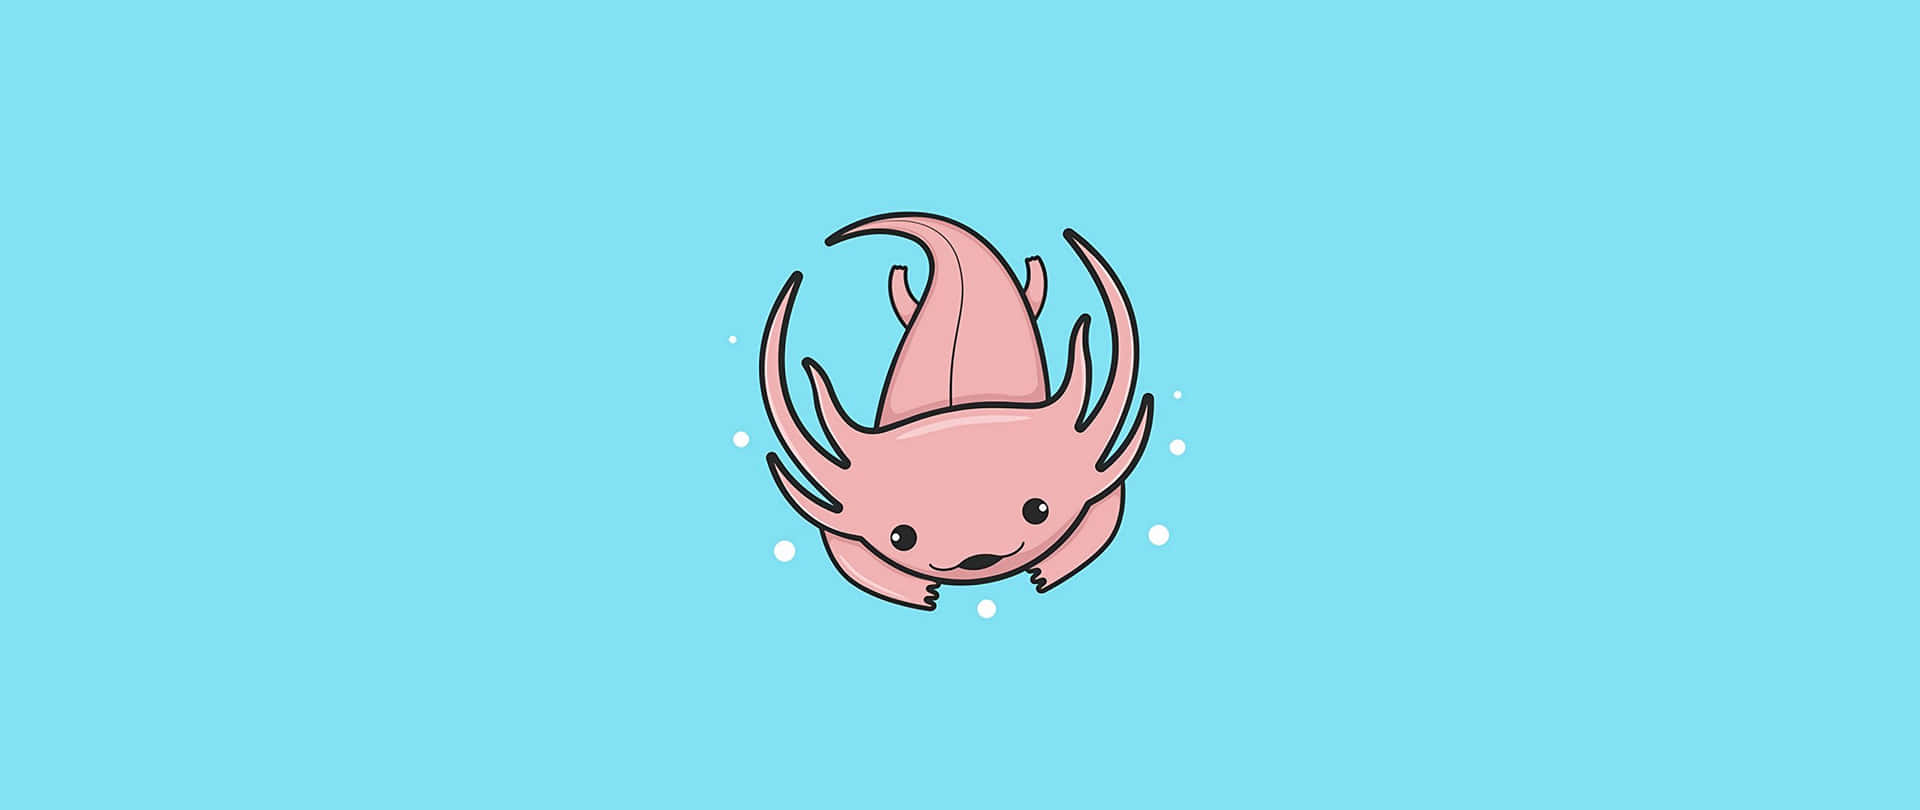 Say Cheese! Adorable Axolotl Greets Its Admirer